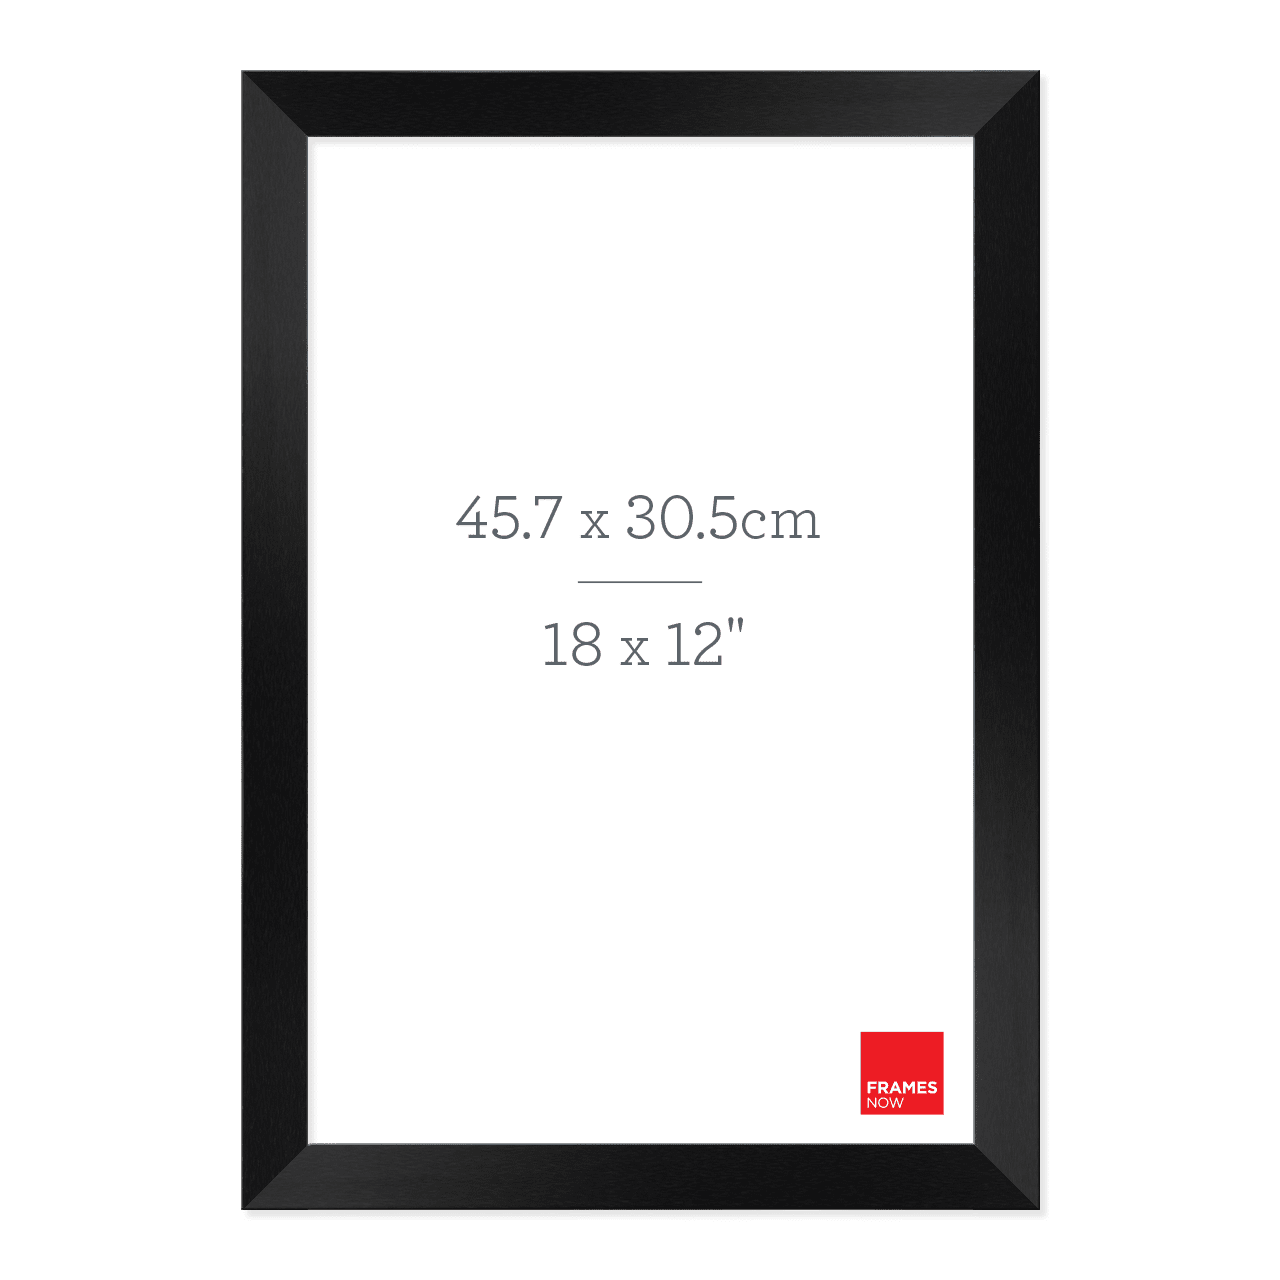 Premium Black Timber Finish Picture Frame for 45.7 x 30.5cm Artwork